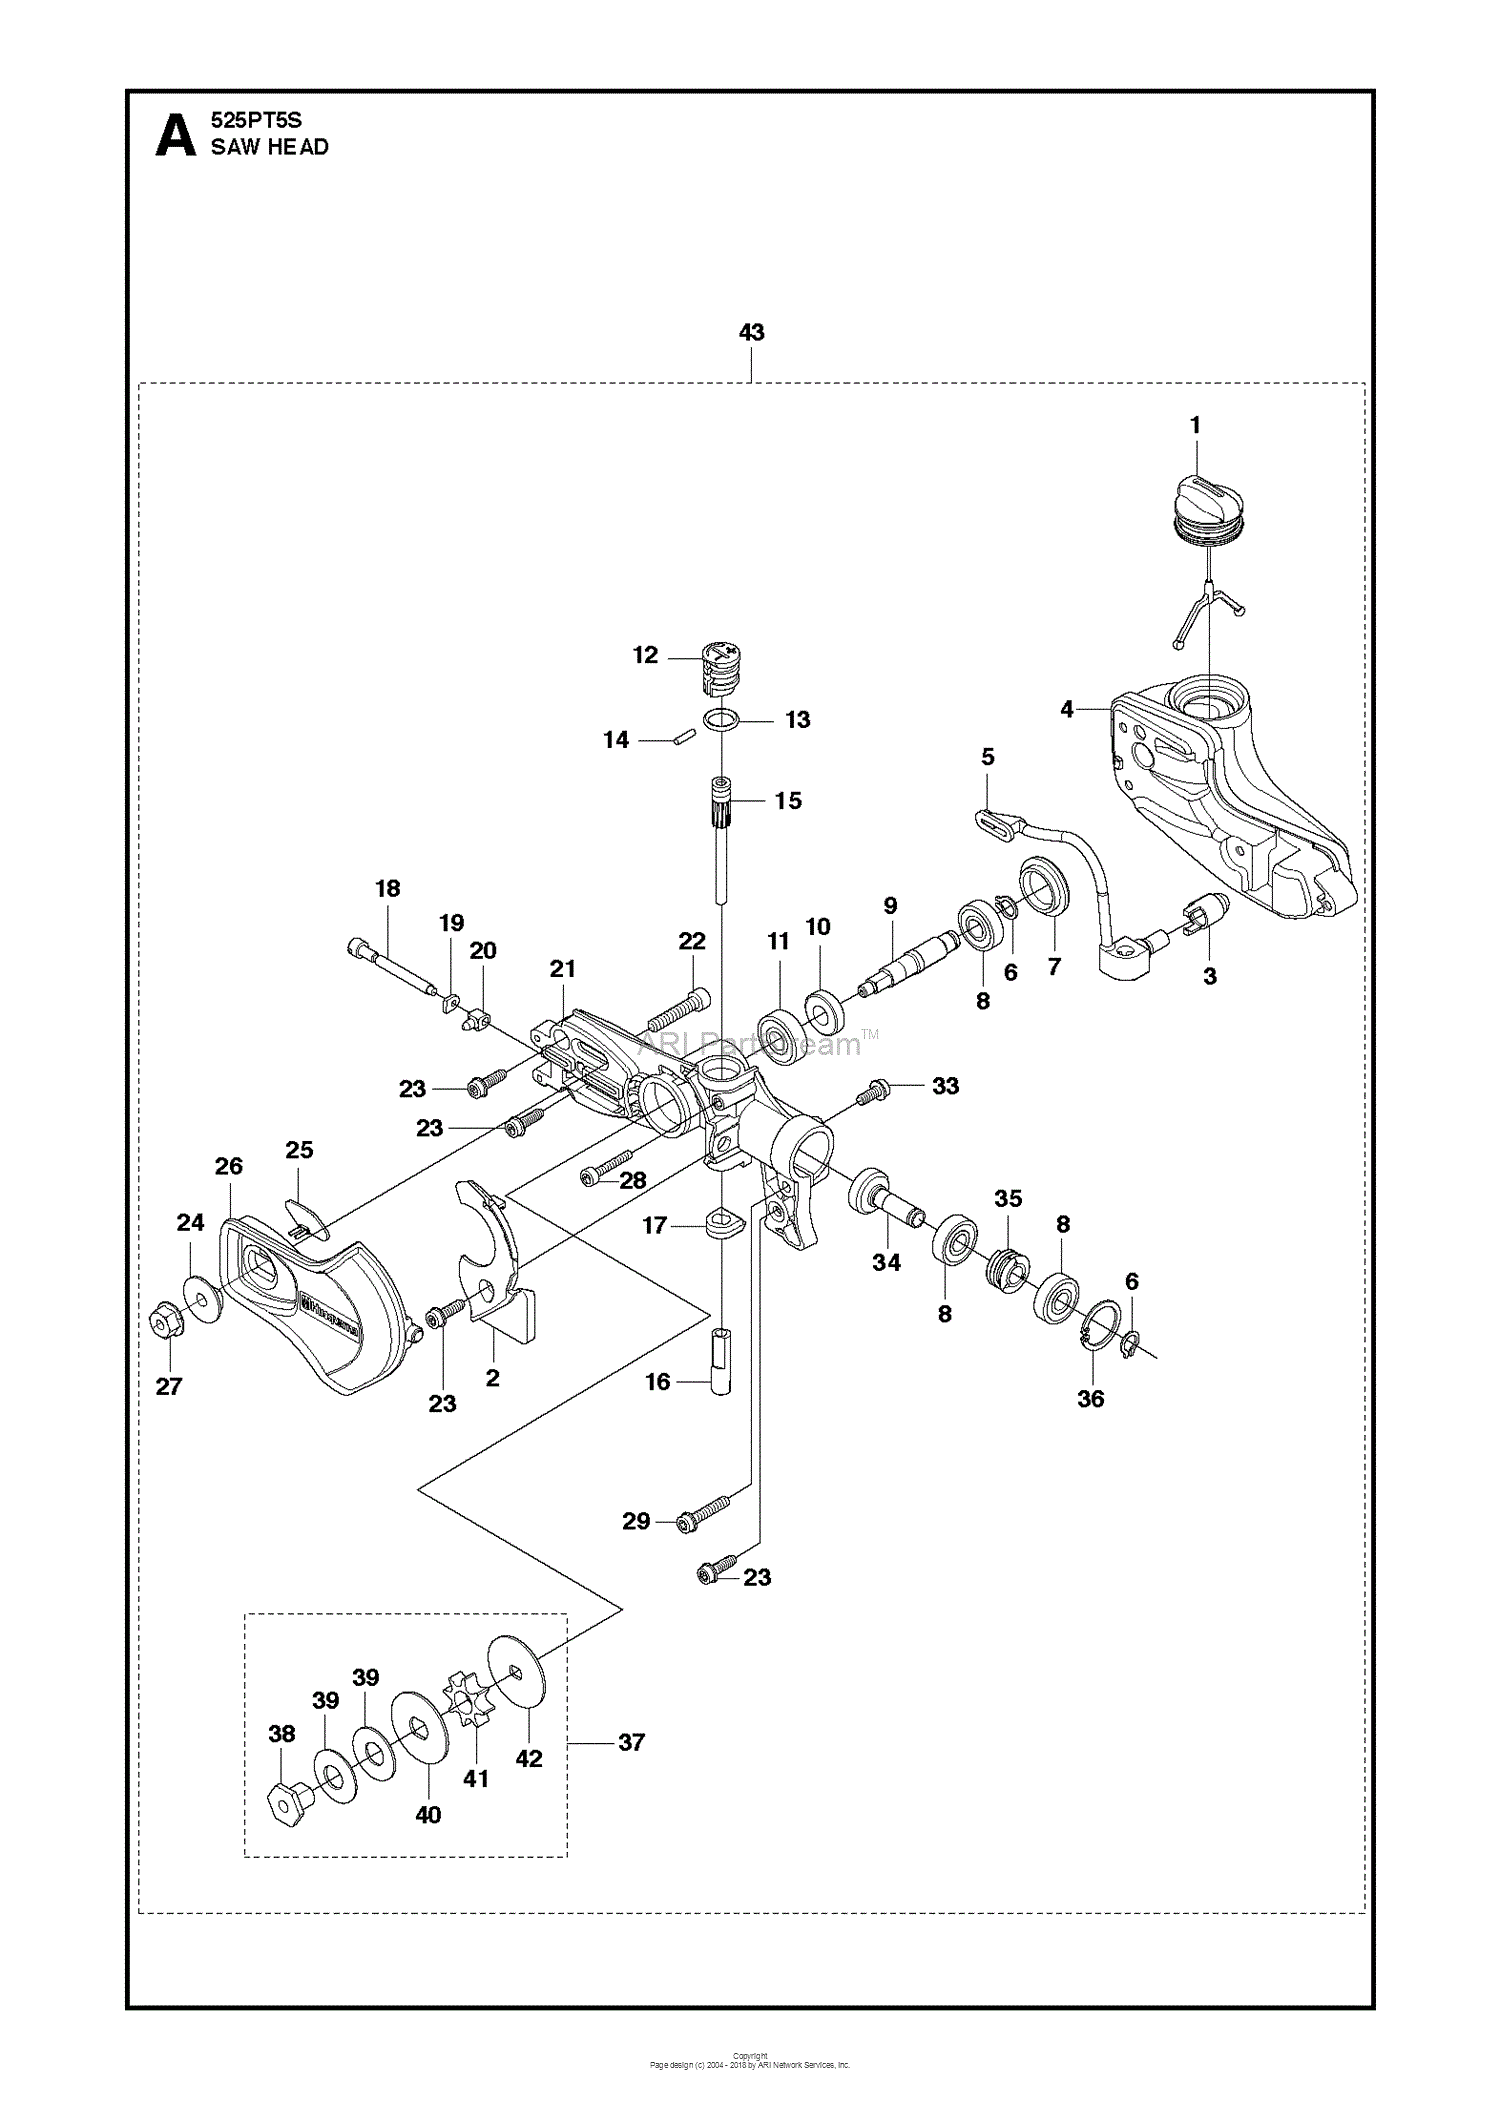 Husqvarna 525 Pt5s Parts Diagram For Saw Head